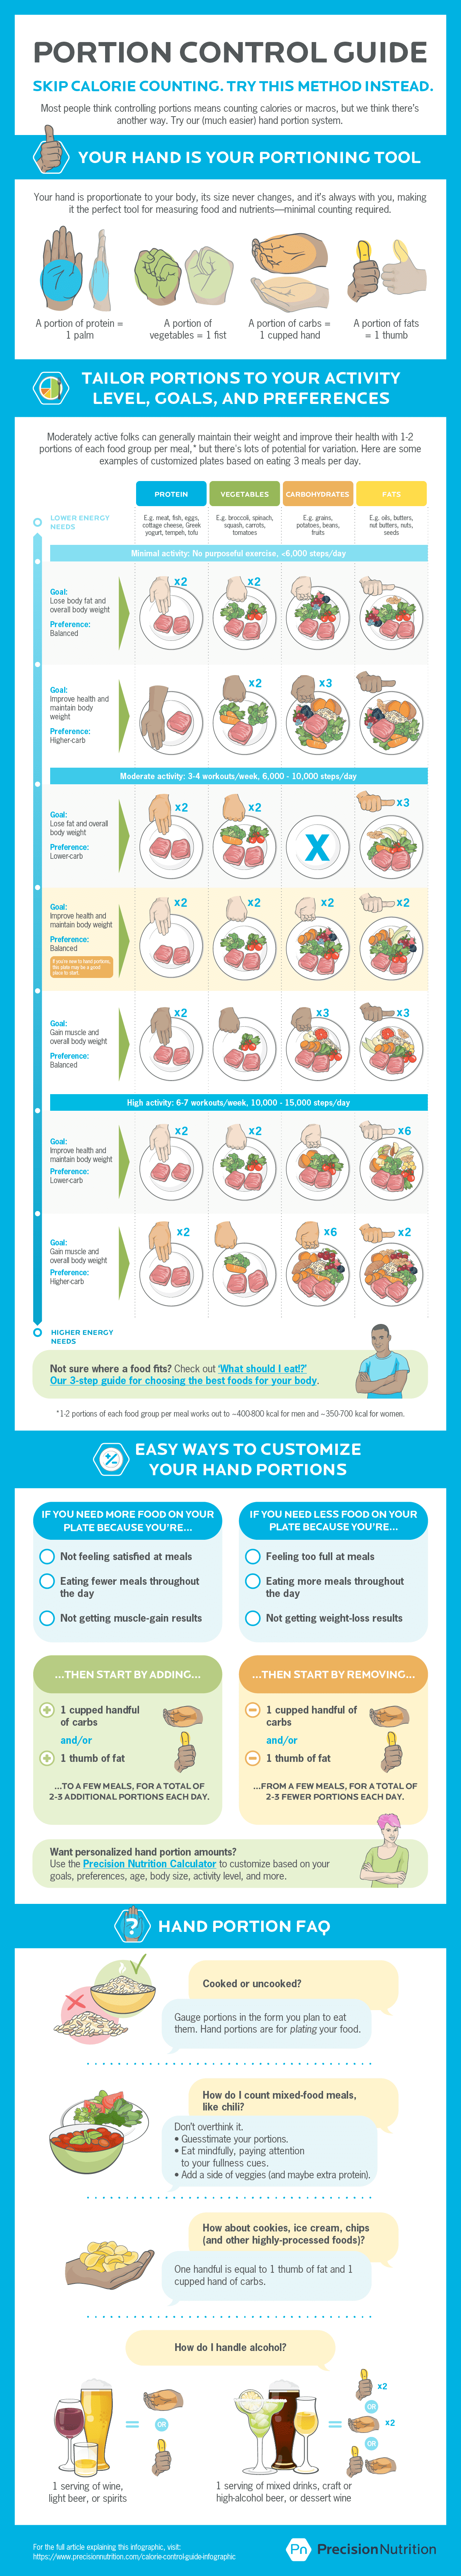 https://assets.precisionnutrition.com/2021/02/calorie-control-guide-infographic-image-1.png